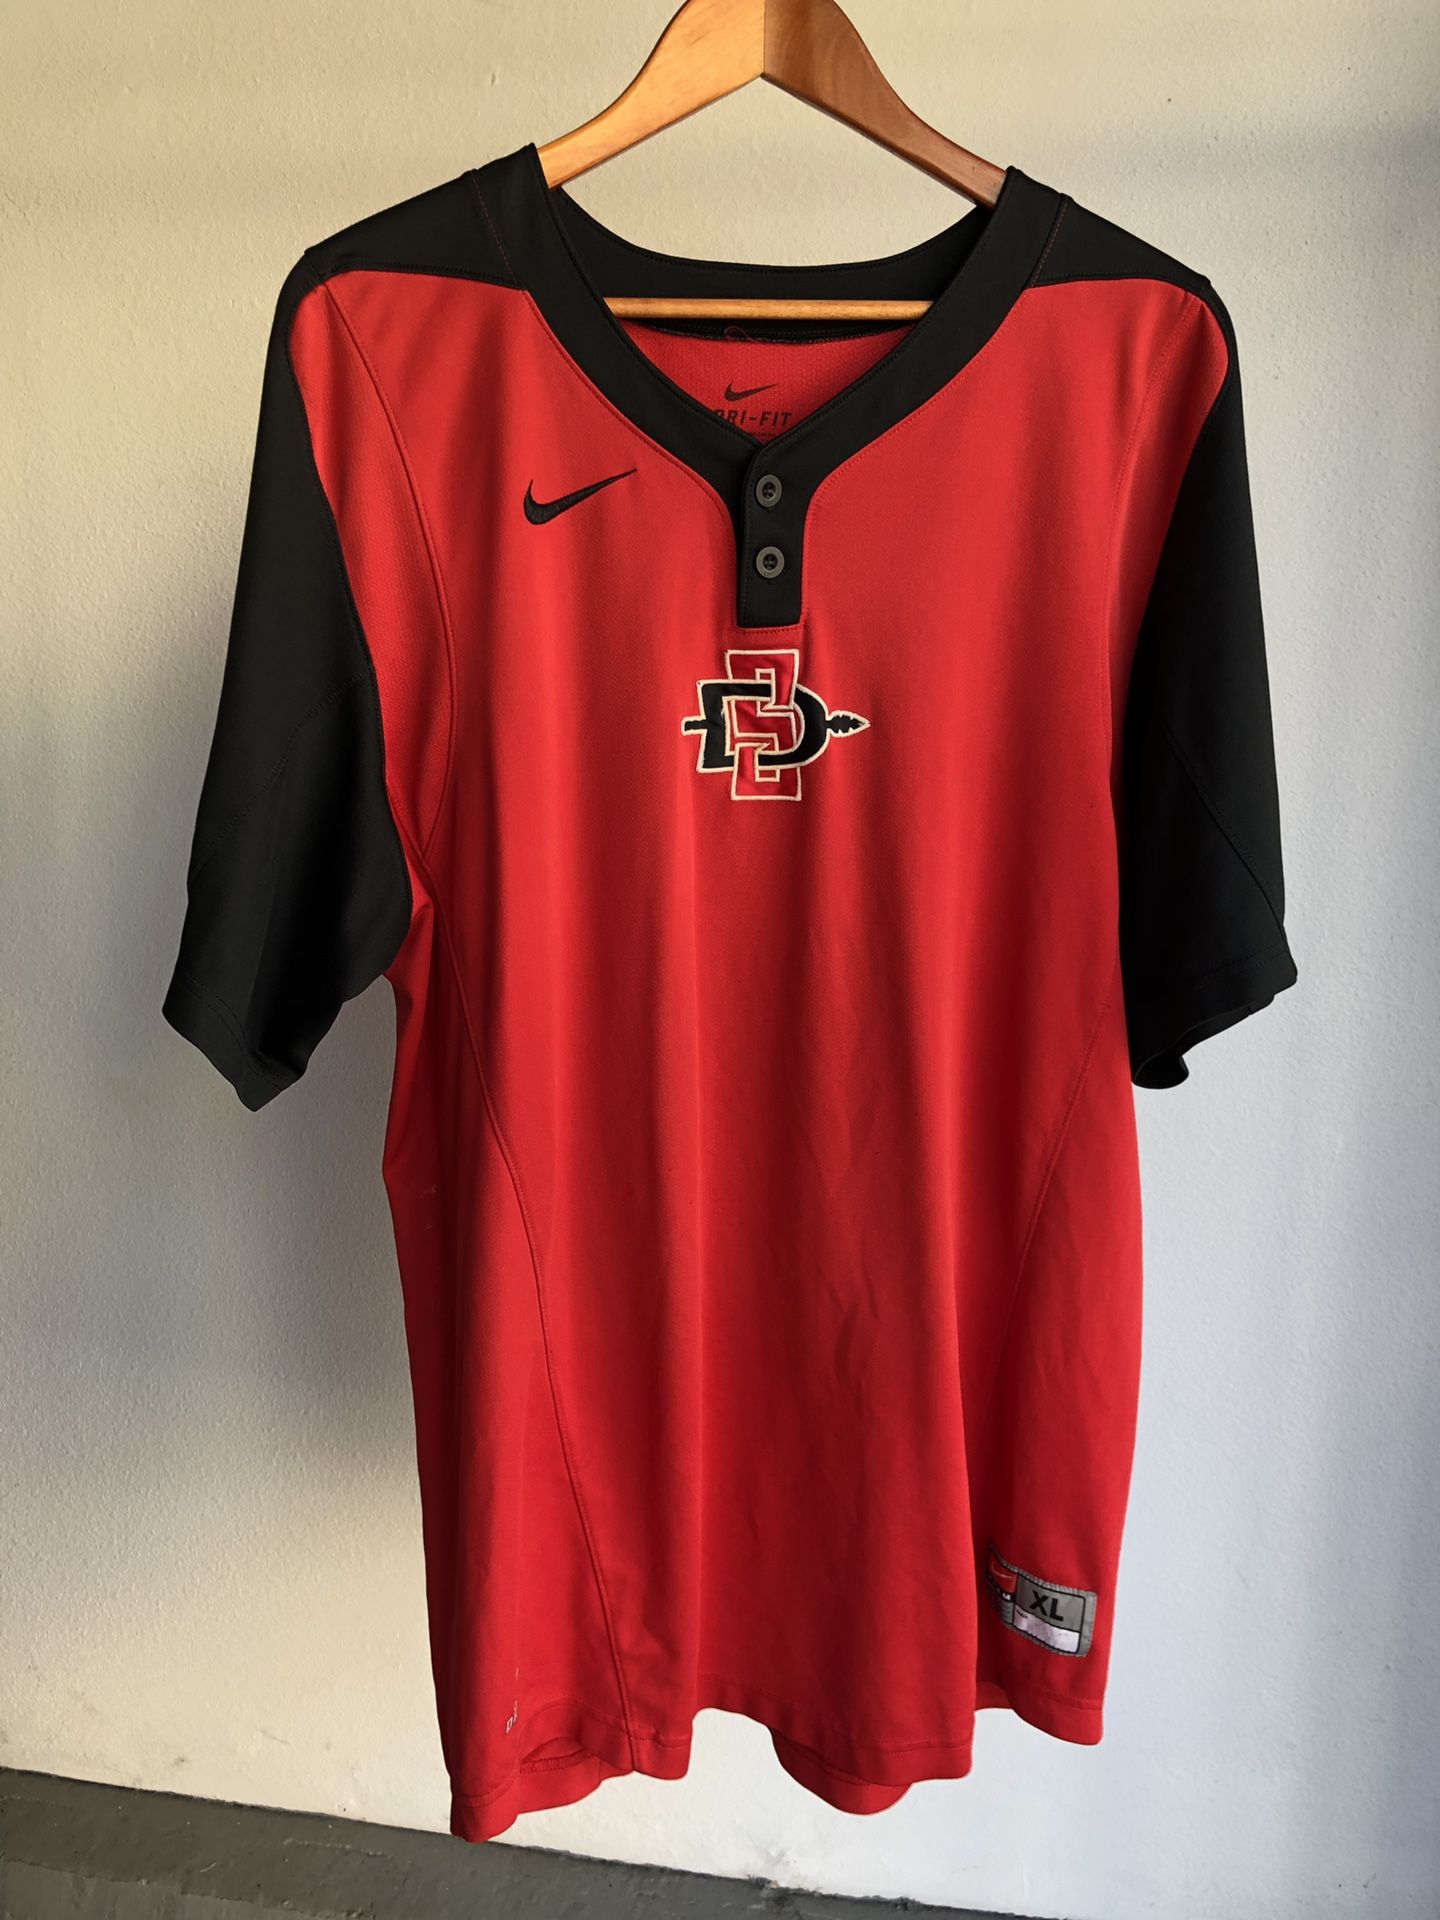 San Diego State University SDSU baseball batting practice jersey XL